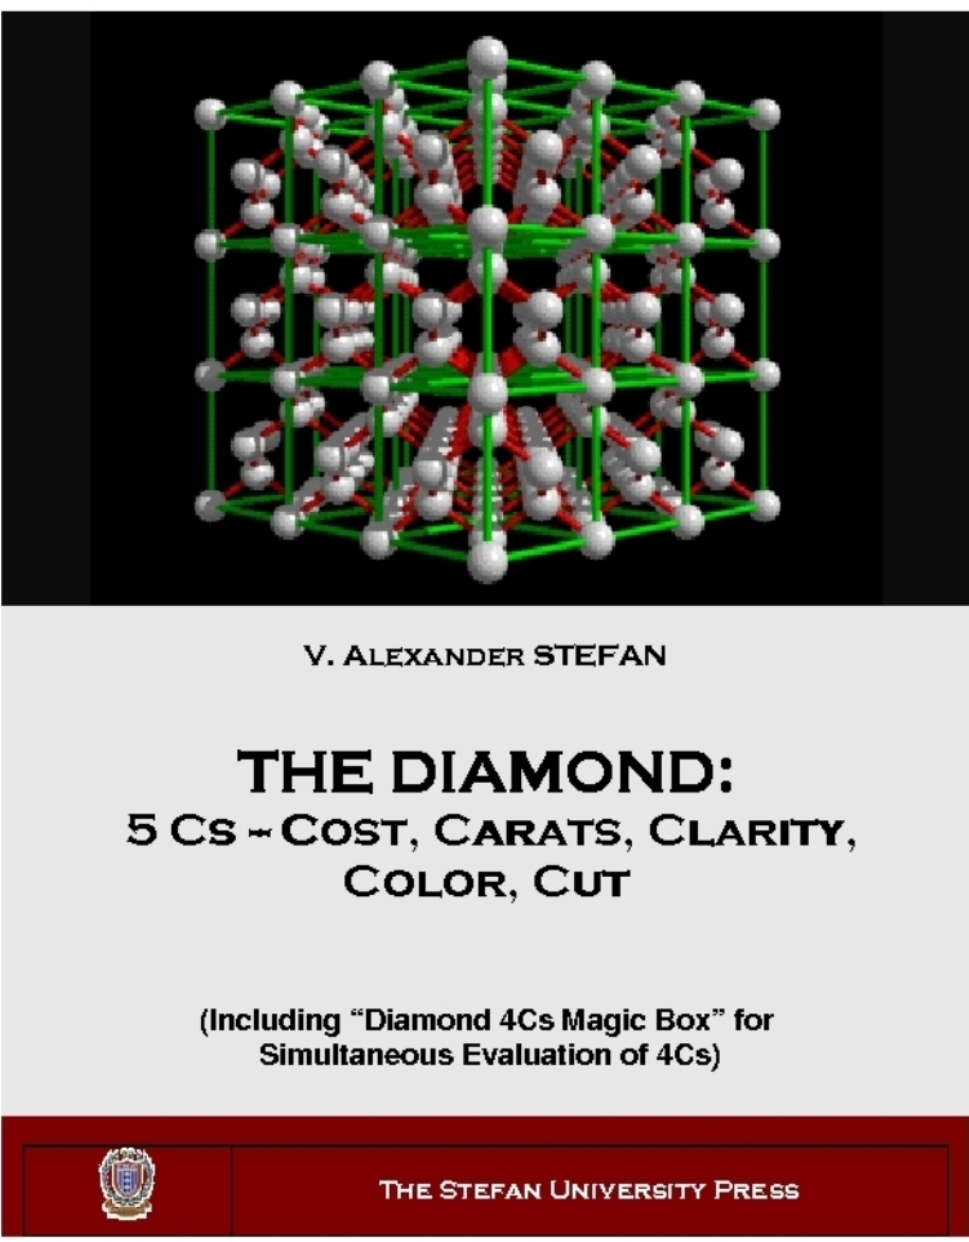 (2002) book. V. Alexander STEFAN, THE DIAMOND: 5 Cs -- Cost, Carat, Clarity, Color, and Cut. THE DIAMOND: 5 Cs -- Cost, Carats, Clarity, Color, and Cut. Includes the guide how to buy a diamond, the physics of diamond, Diamond 4Cs Magic Box for simultaneous evaluation of the 4Cs, a Stefans invention based on Raman scattering of multi laser beams off a diamond to be graded, and an account of the laboratory created diamonds.